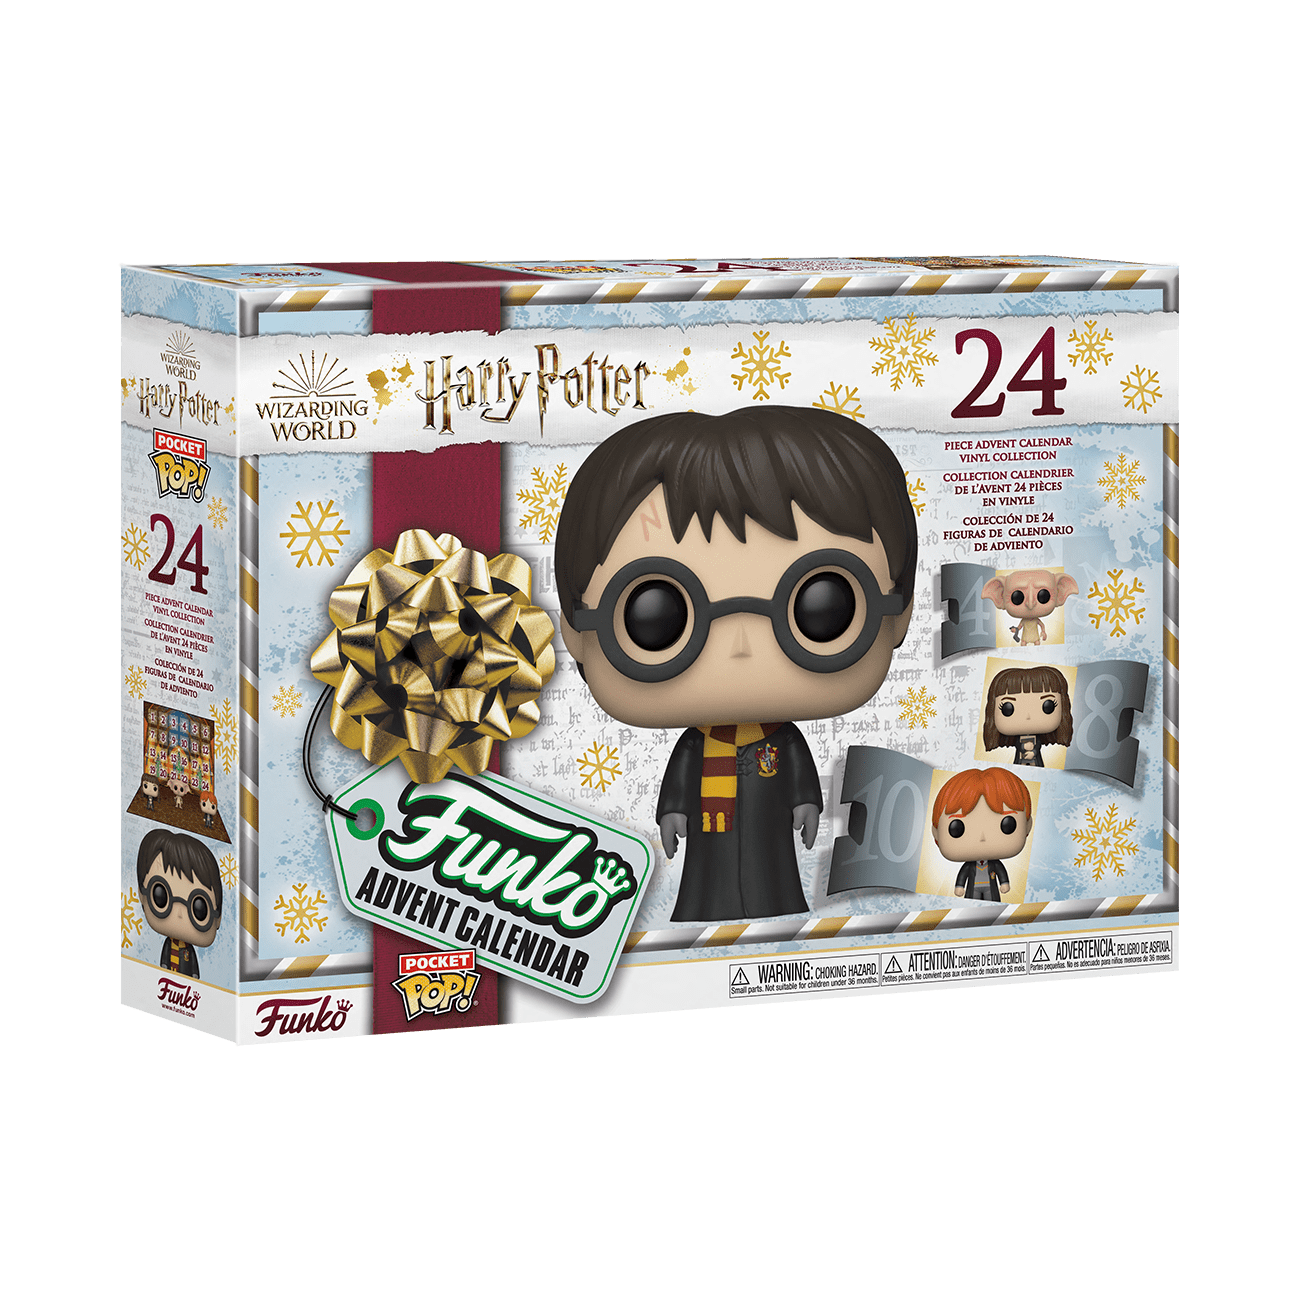 Advent Calendar Weihnachtkalender Harry Potter Adventskalender 2019 Funko POP 